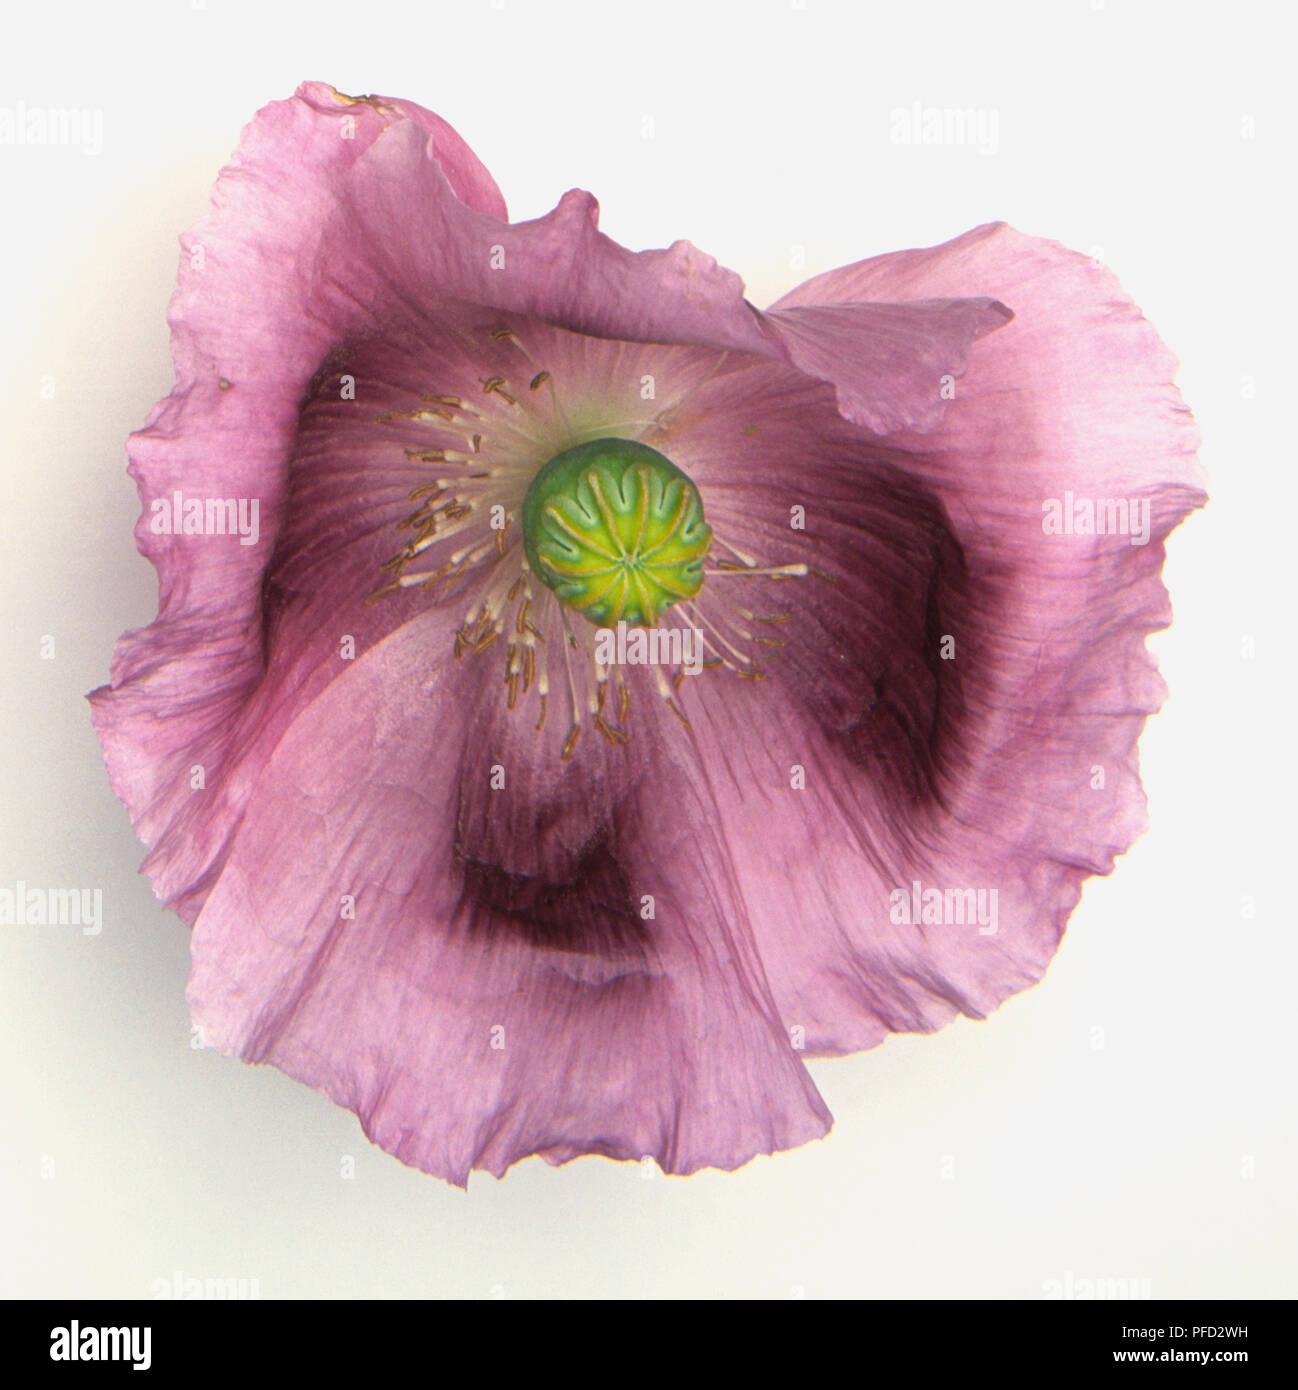 Papaver somniferum, flower of the opium poppy, pink-purple broad petals, flower head. Stock Photo